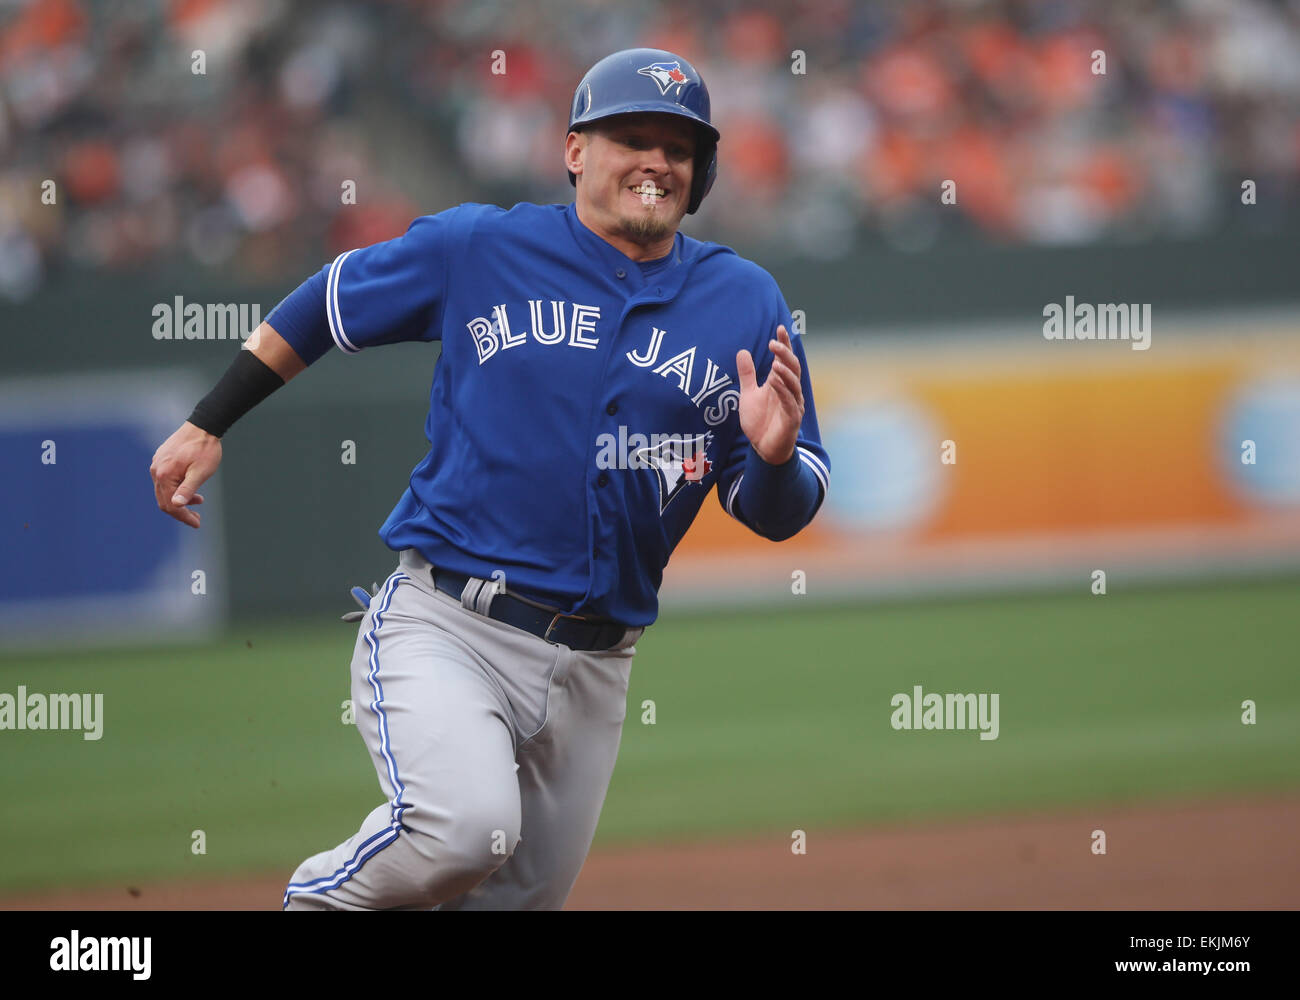 Toronto blue jays third baseman hi-res stock photography and